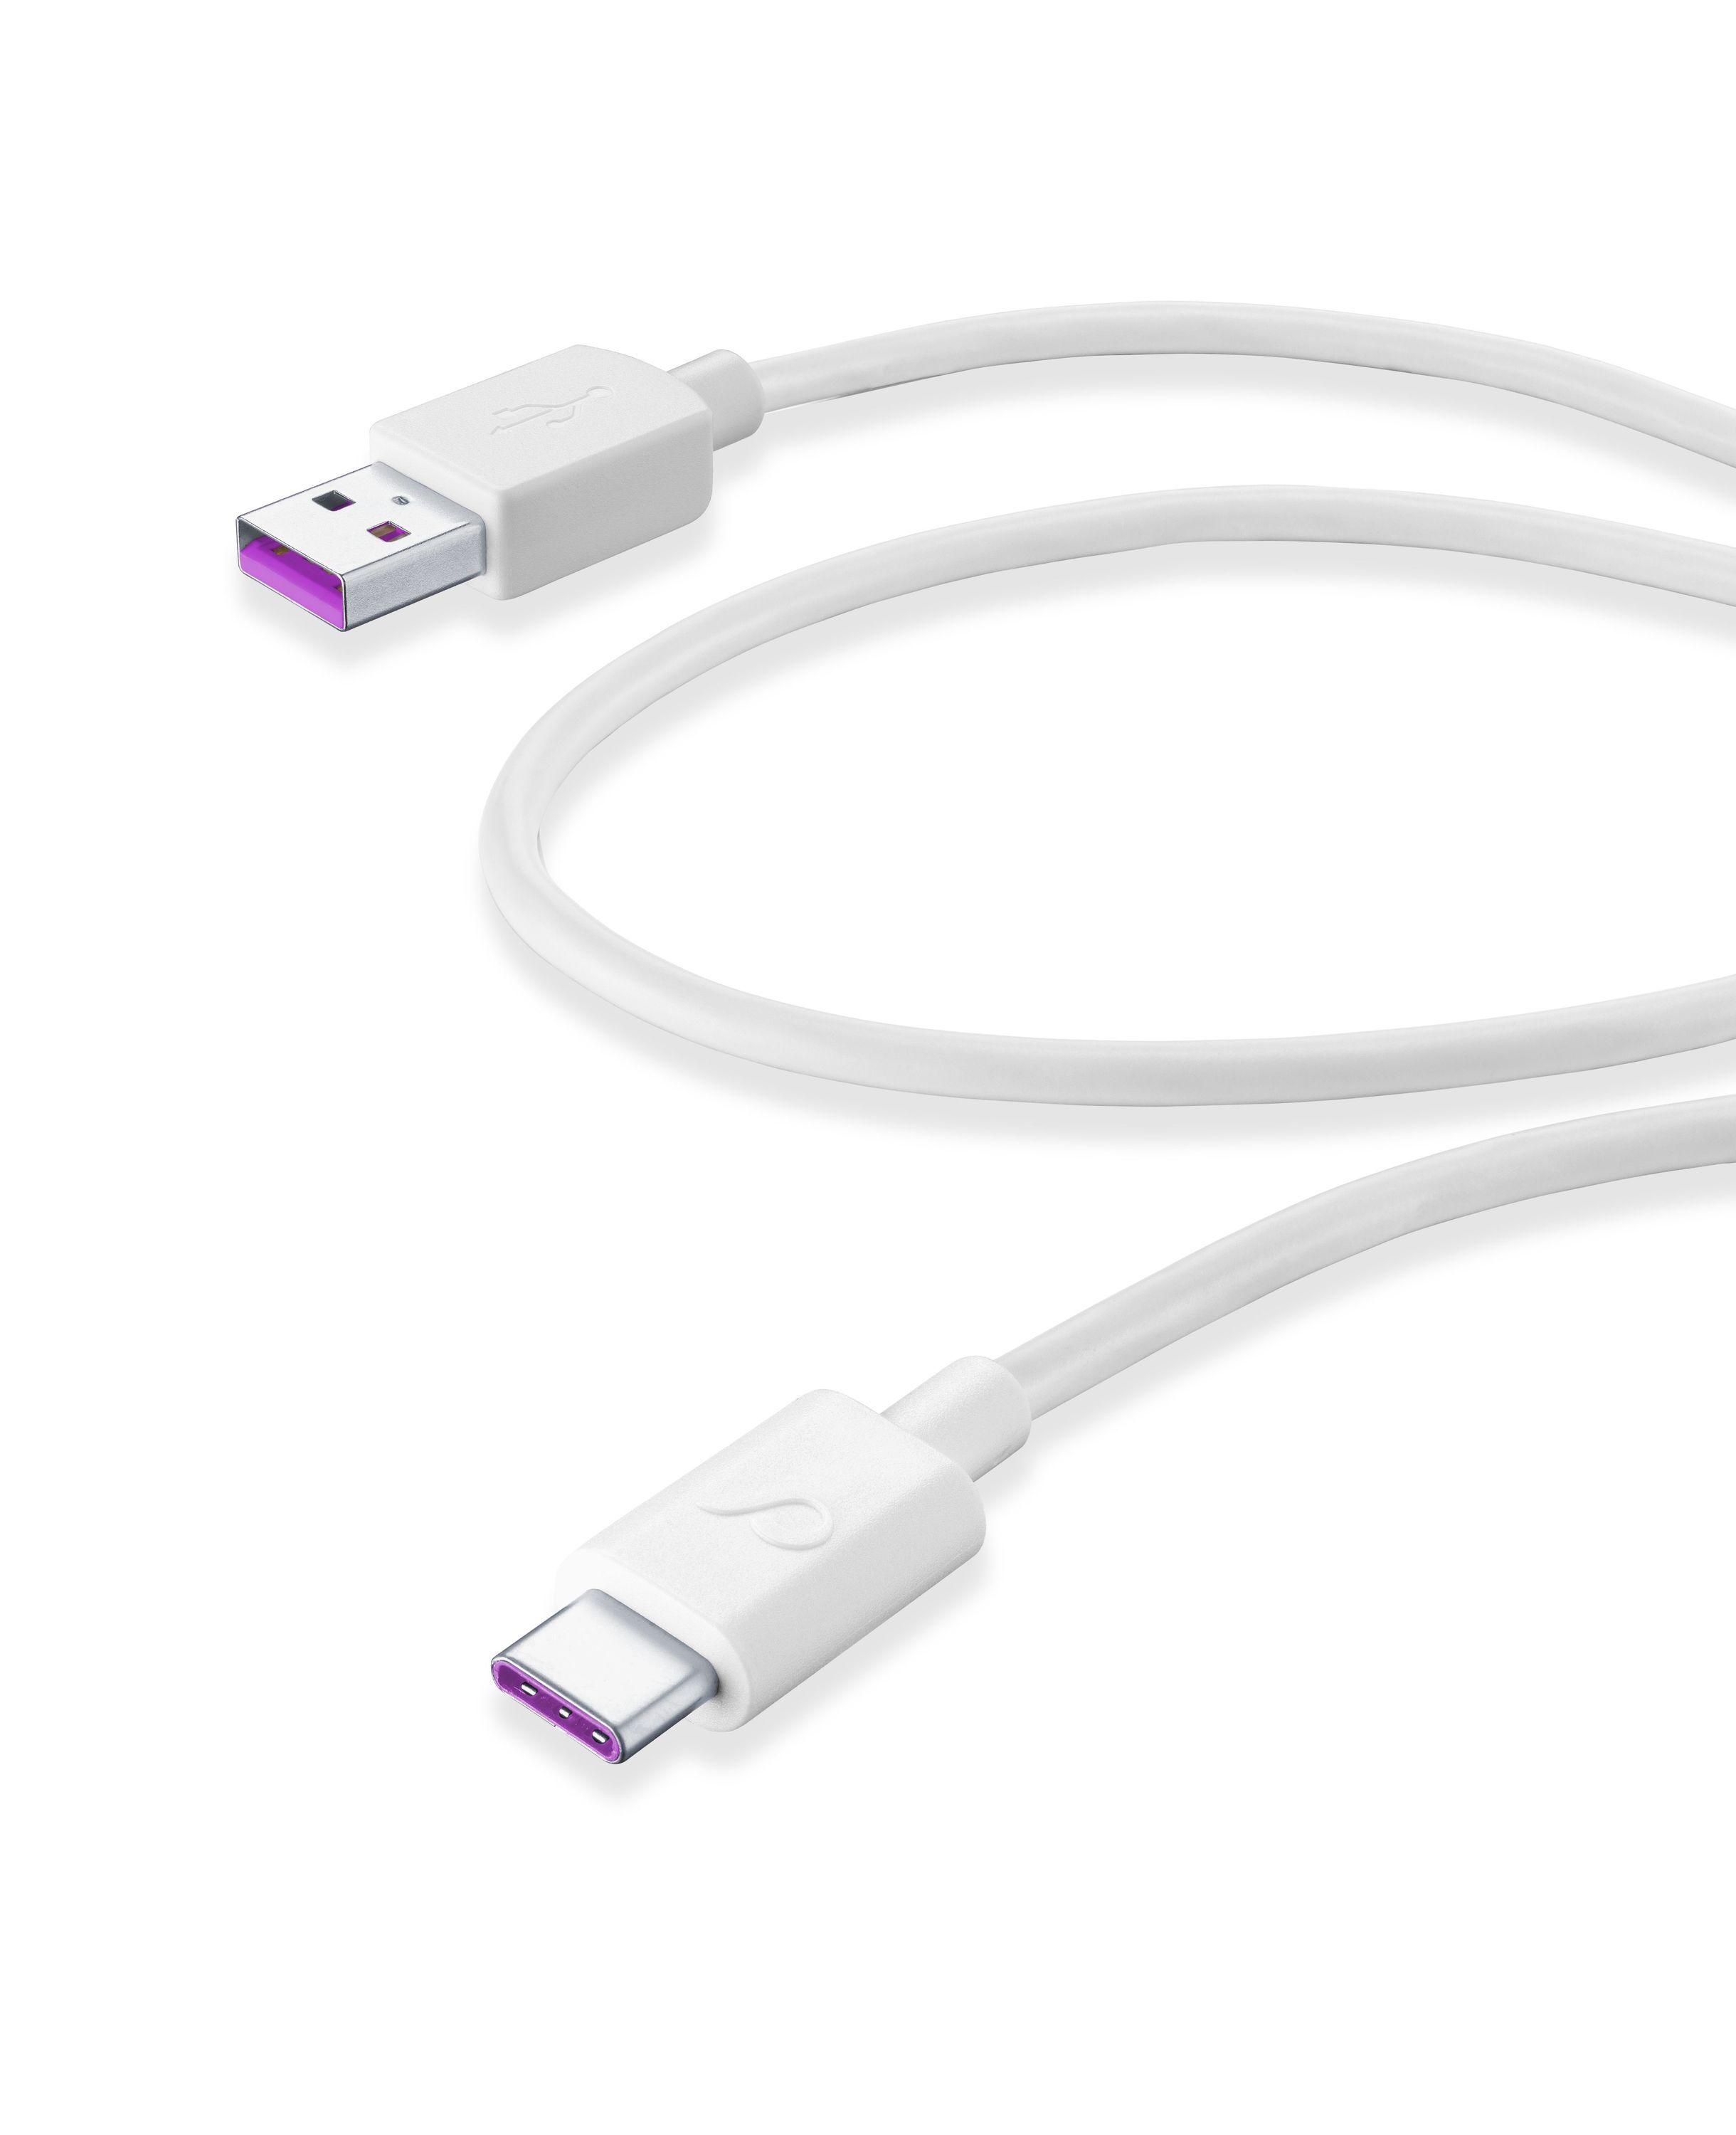 USB datový kabel SC s USB-C konektorem, Huawei SuperCharge technologie, 120 cm, bílý